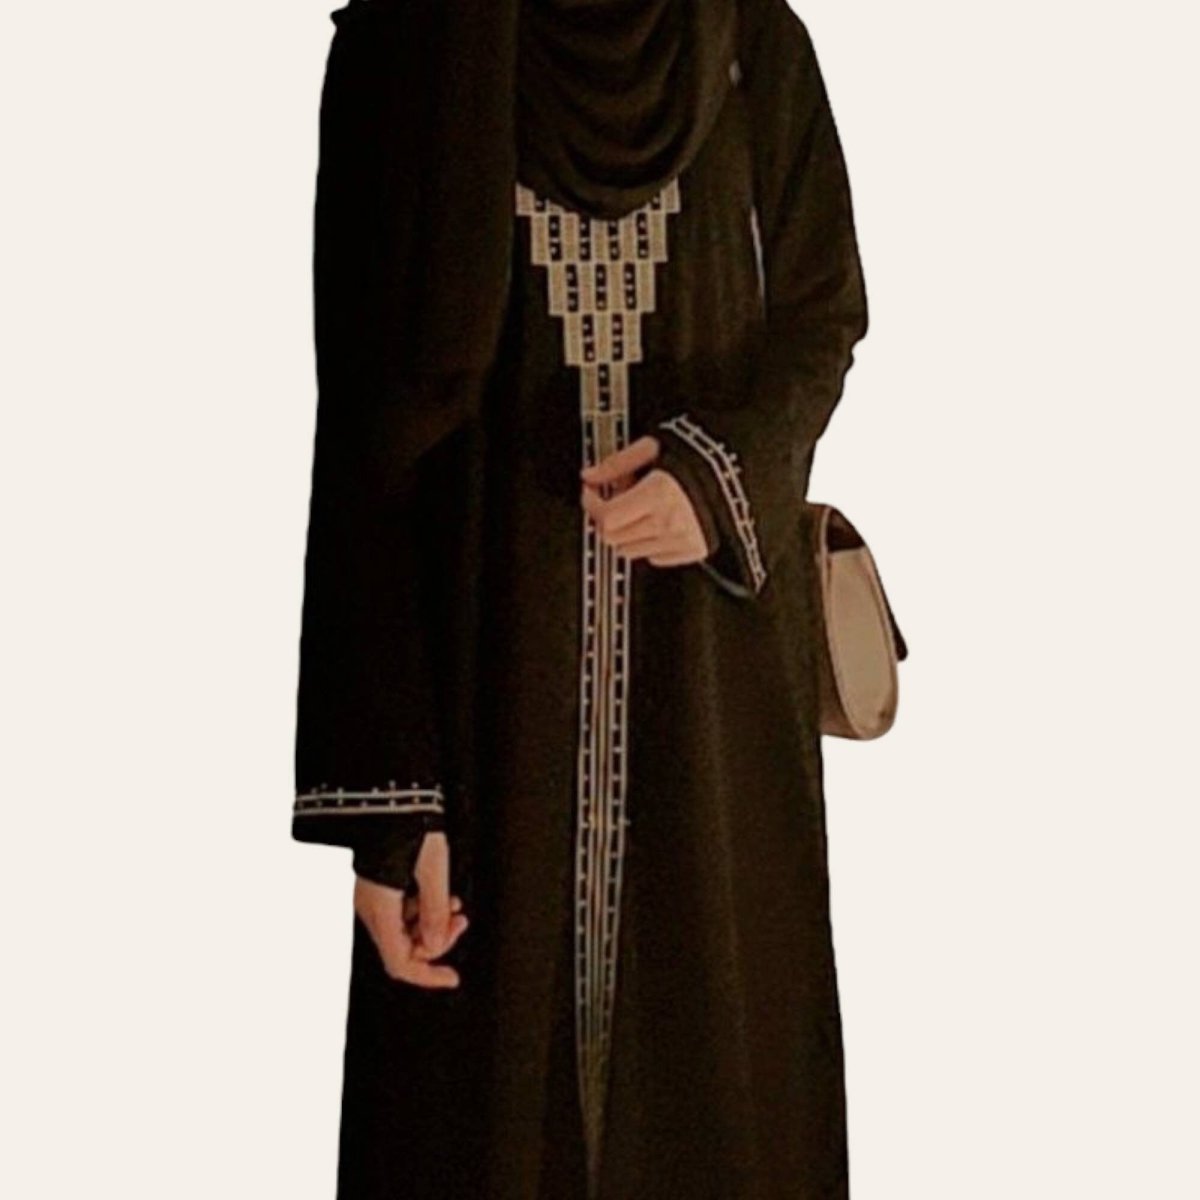 Women Black Saudi Abaya for Hajj and Umrah